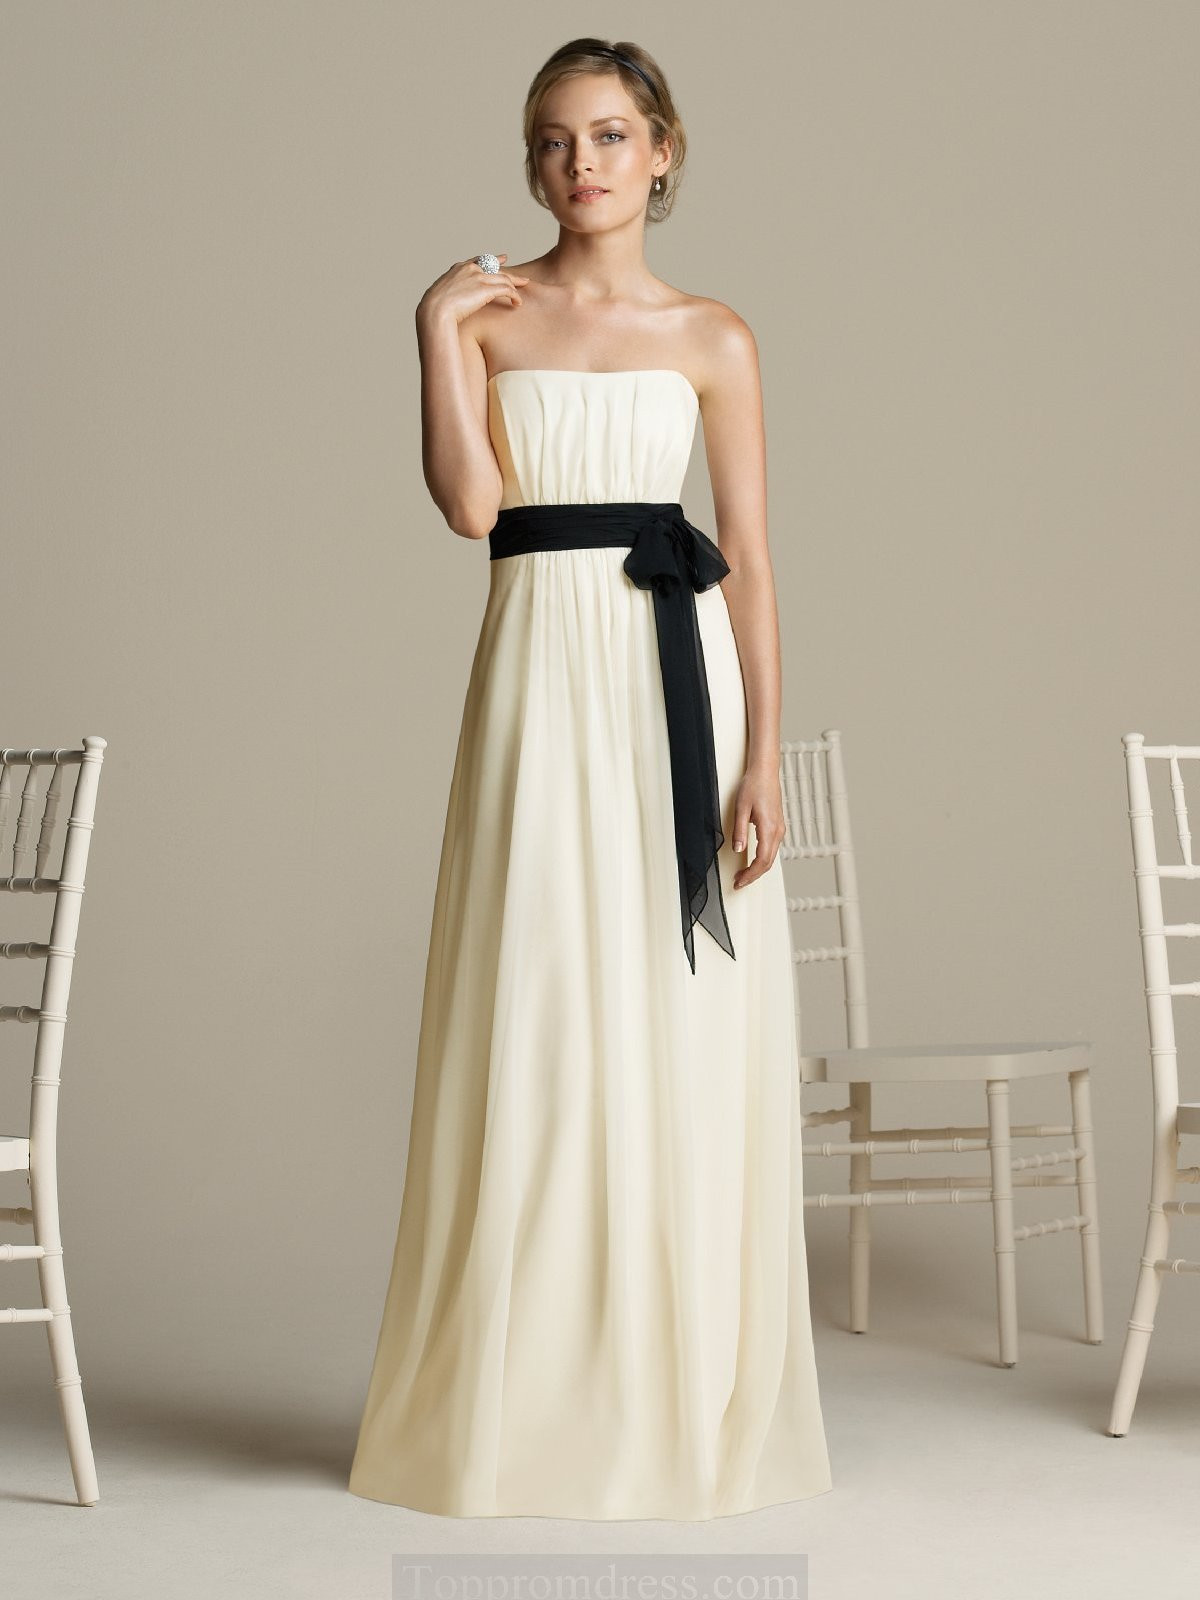 Wedding Gown Sashes
 Lace Wedding Dress With Black Sash